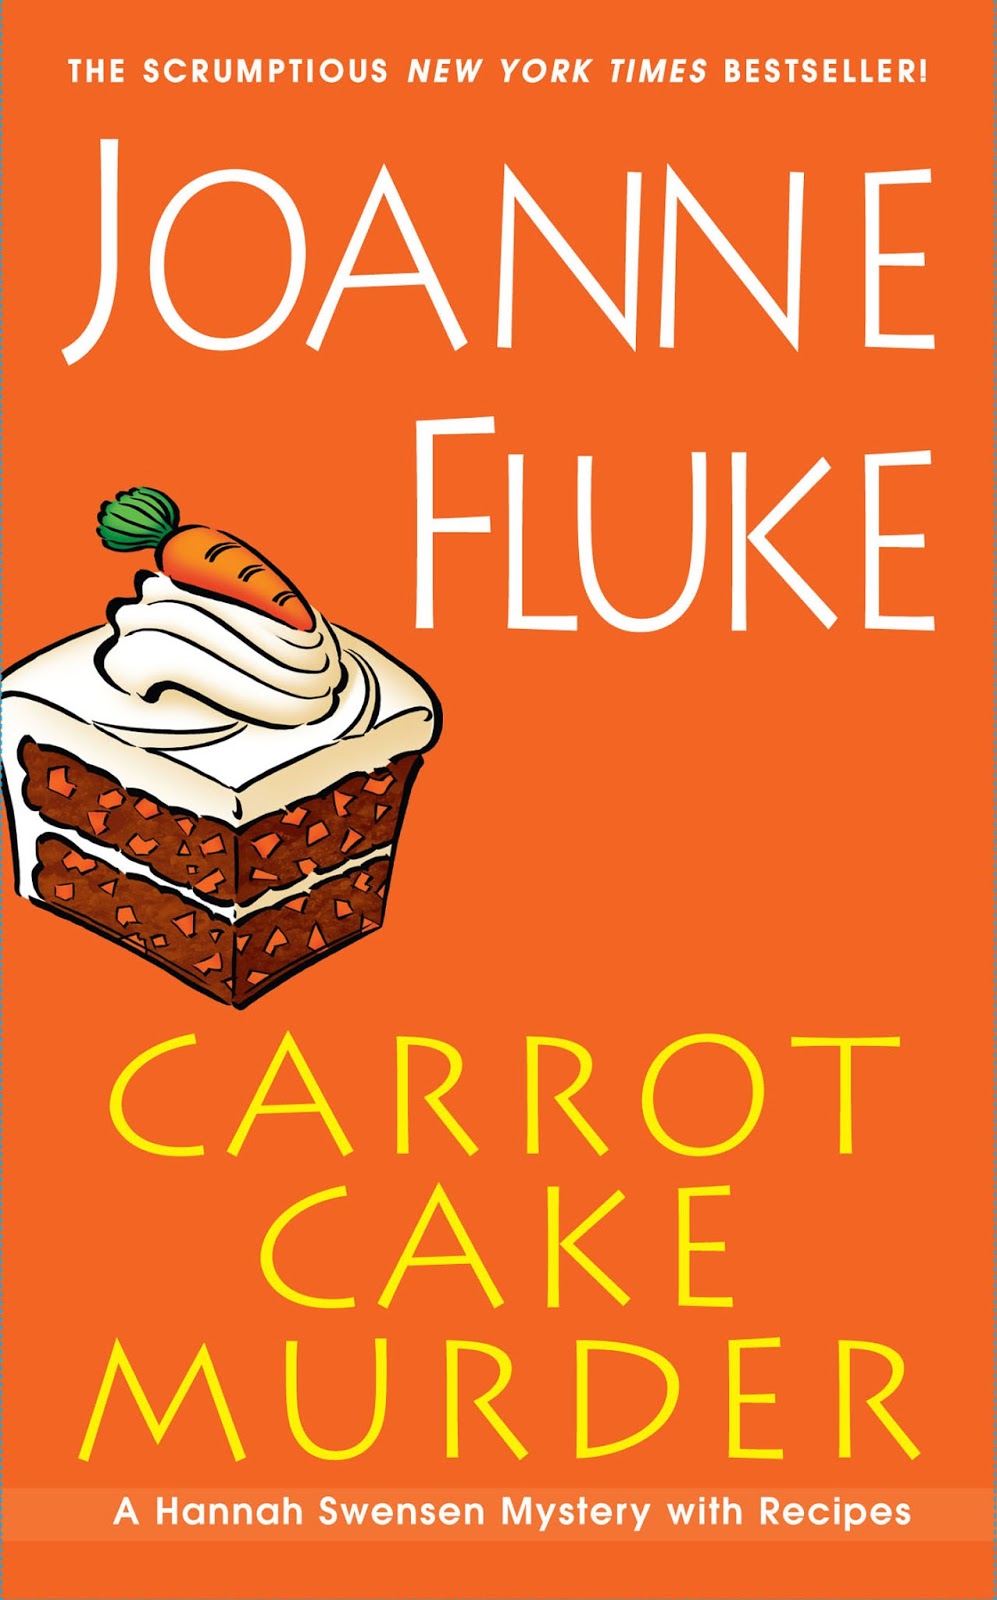 My Interdimensional Chaos: REVIEW: Carrot Cake Murder